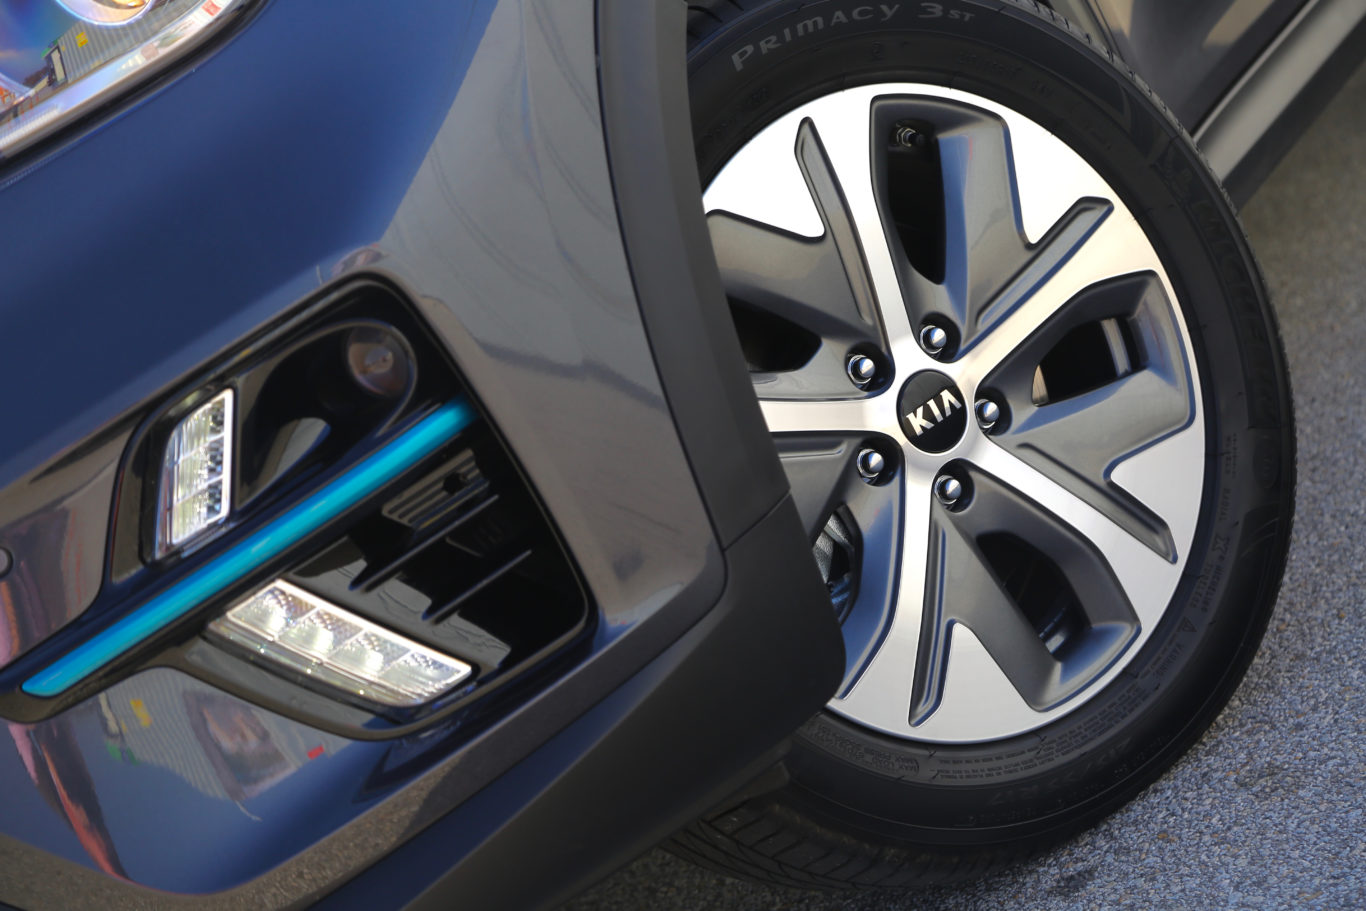 Stylish alloy wheels give the e-Niro a premium look